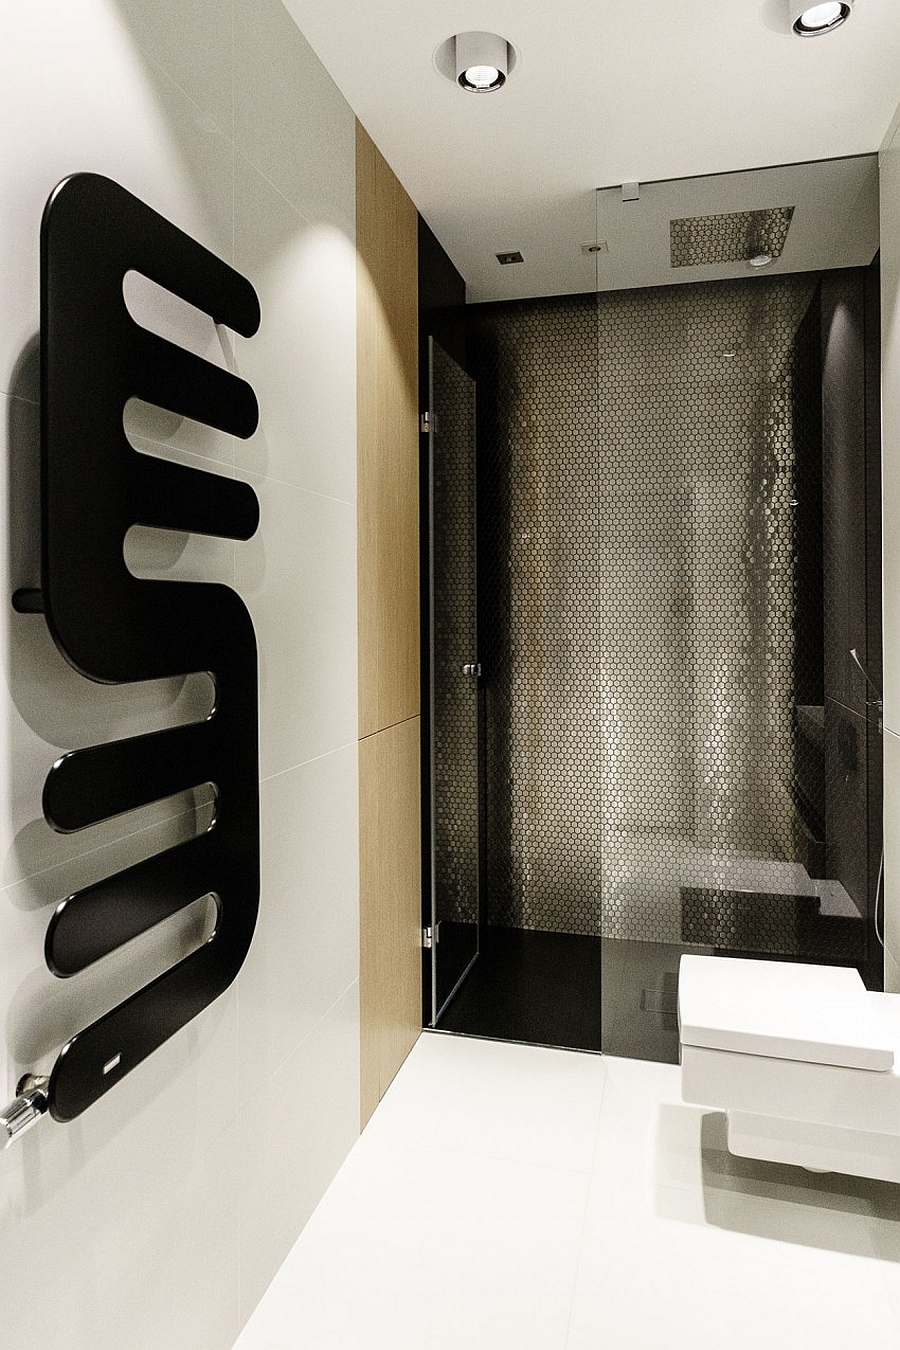 Sleek and glamorous modern bathroom design